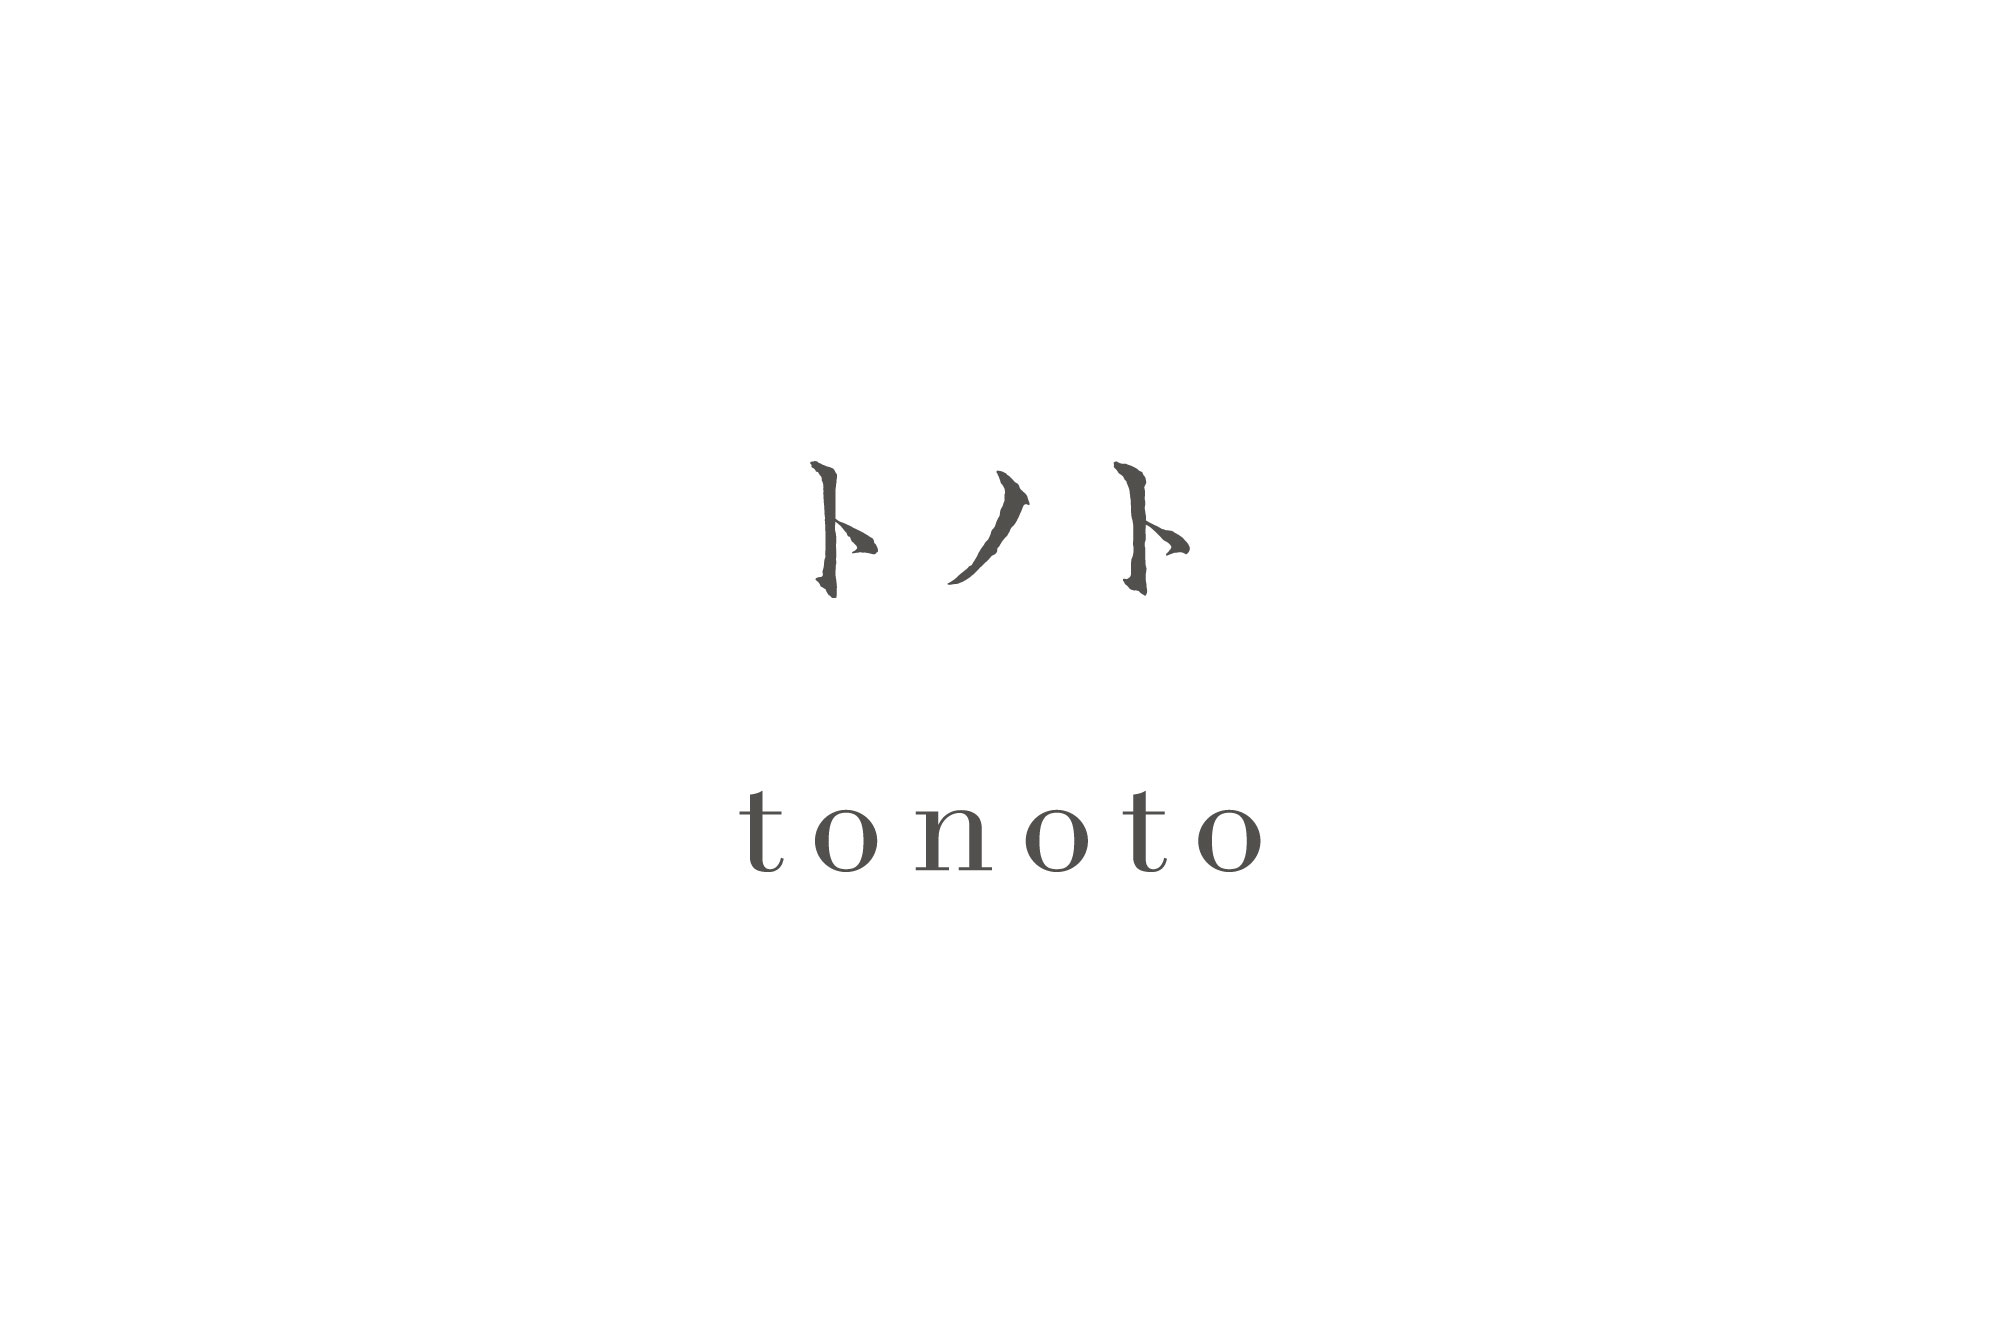 Photo of tonoto